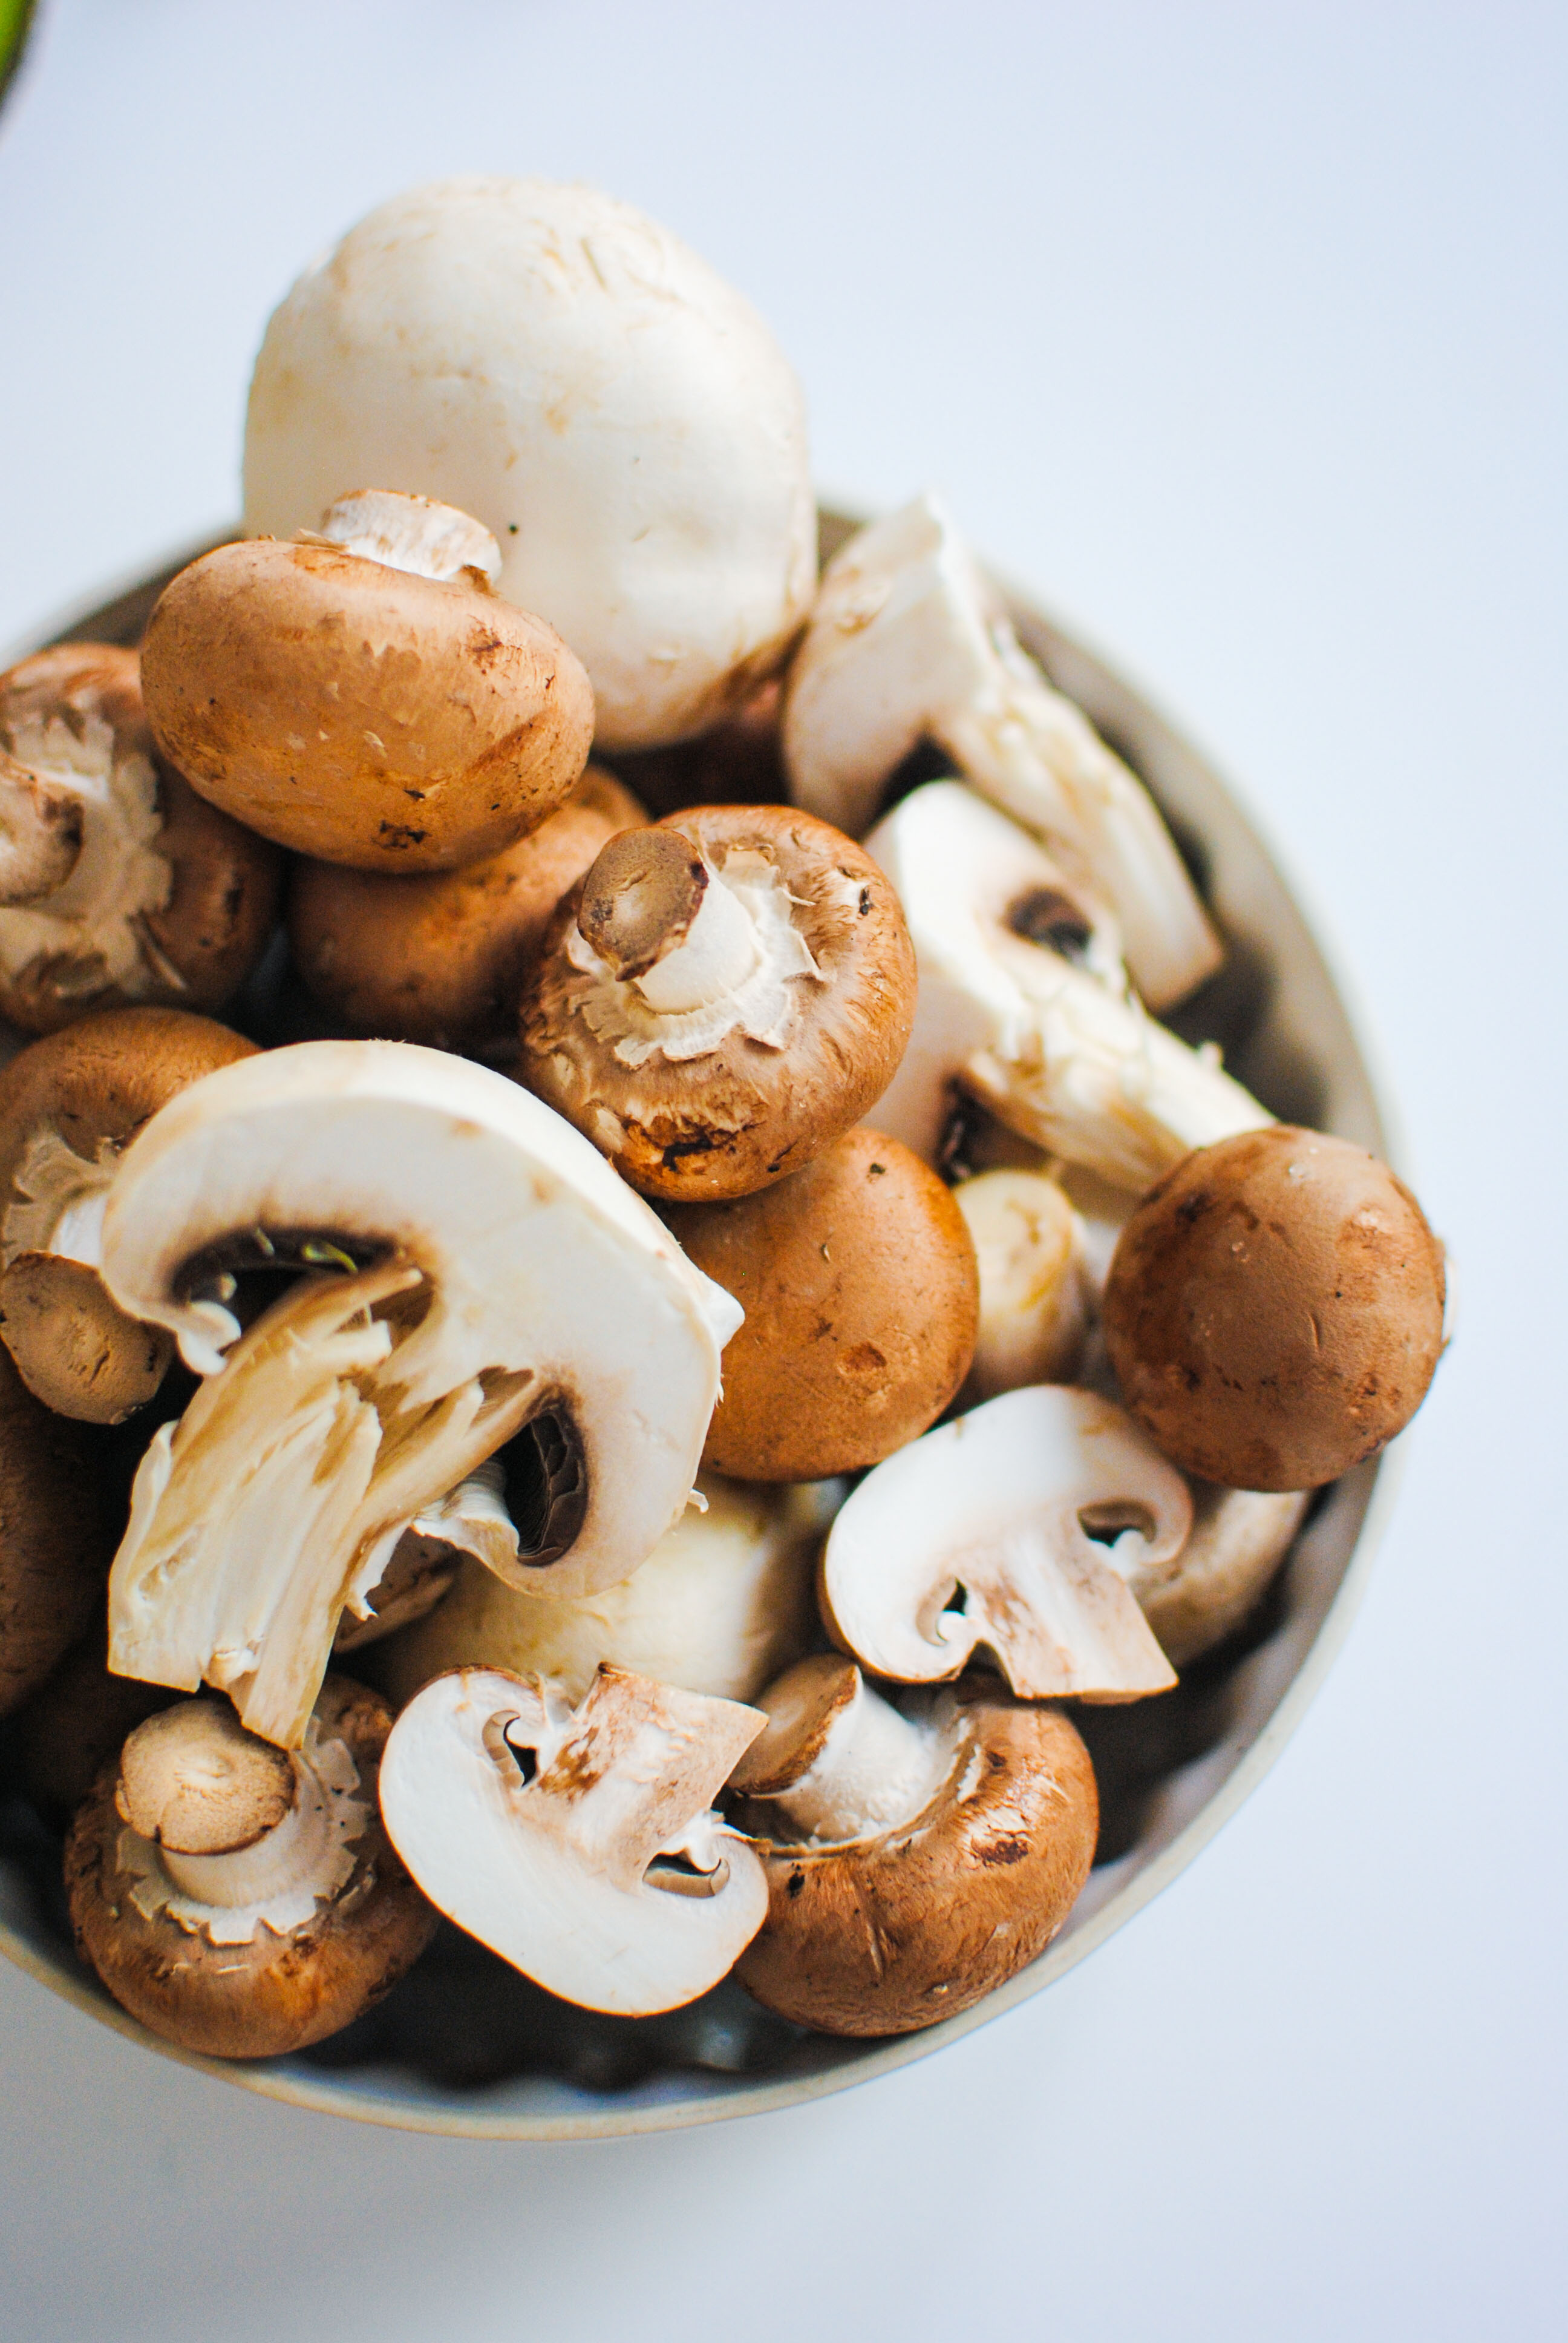 mushroom ceviche | please consider | joana limao